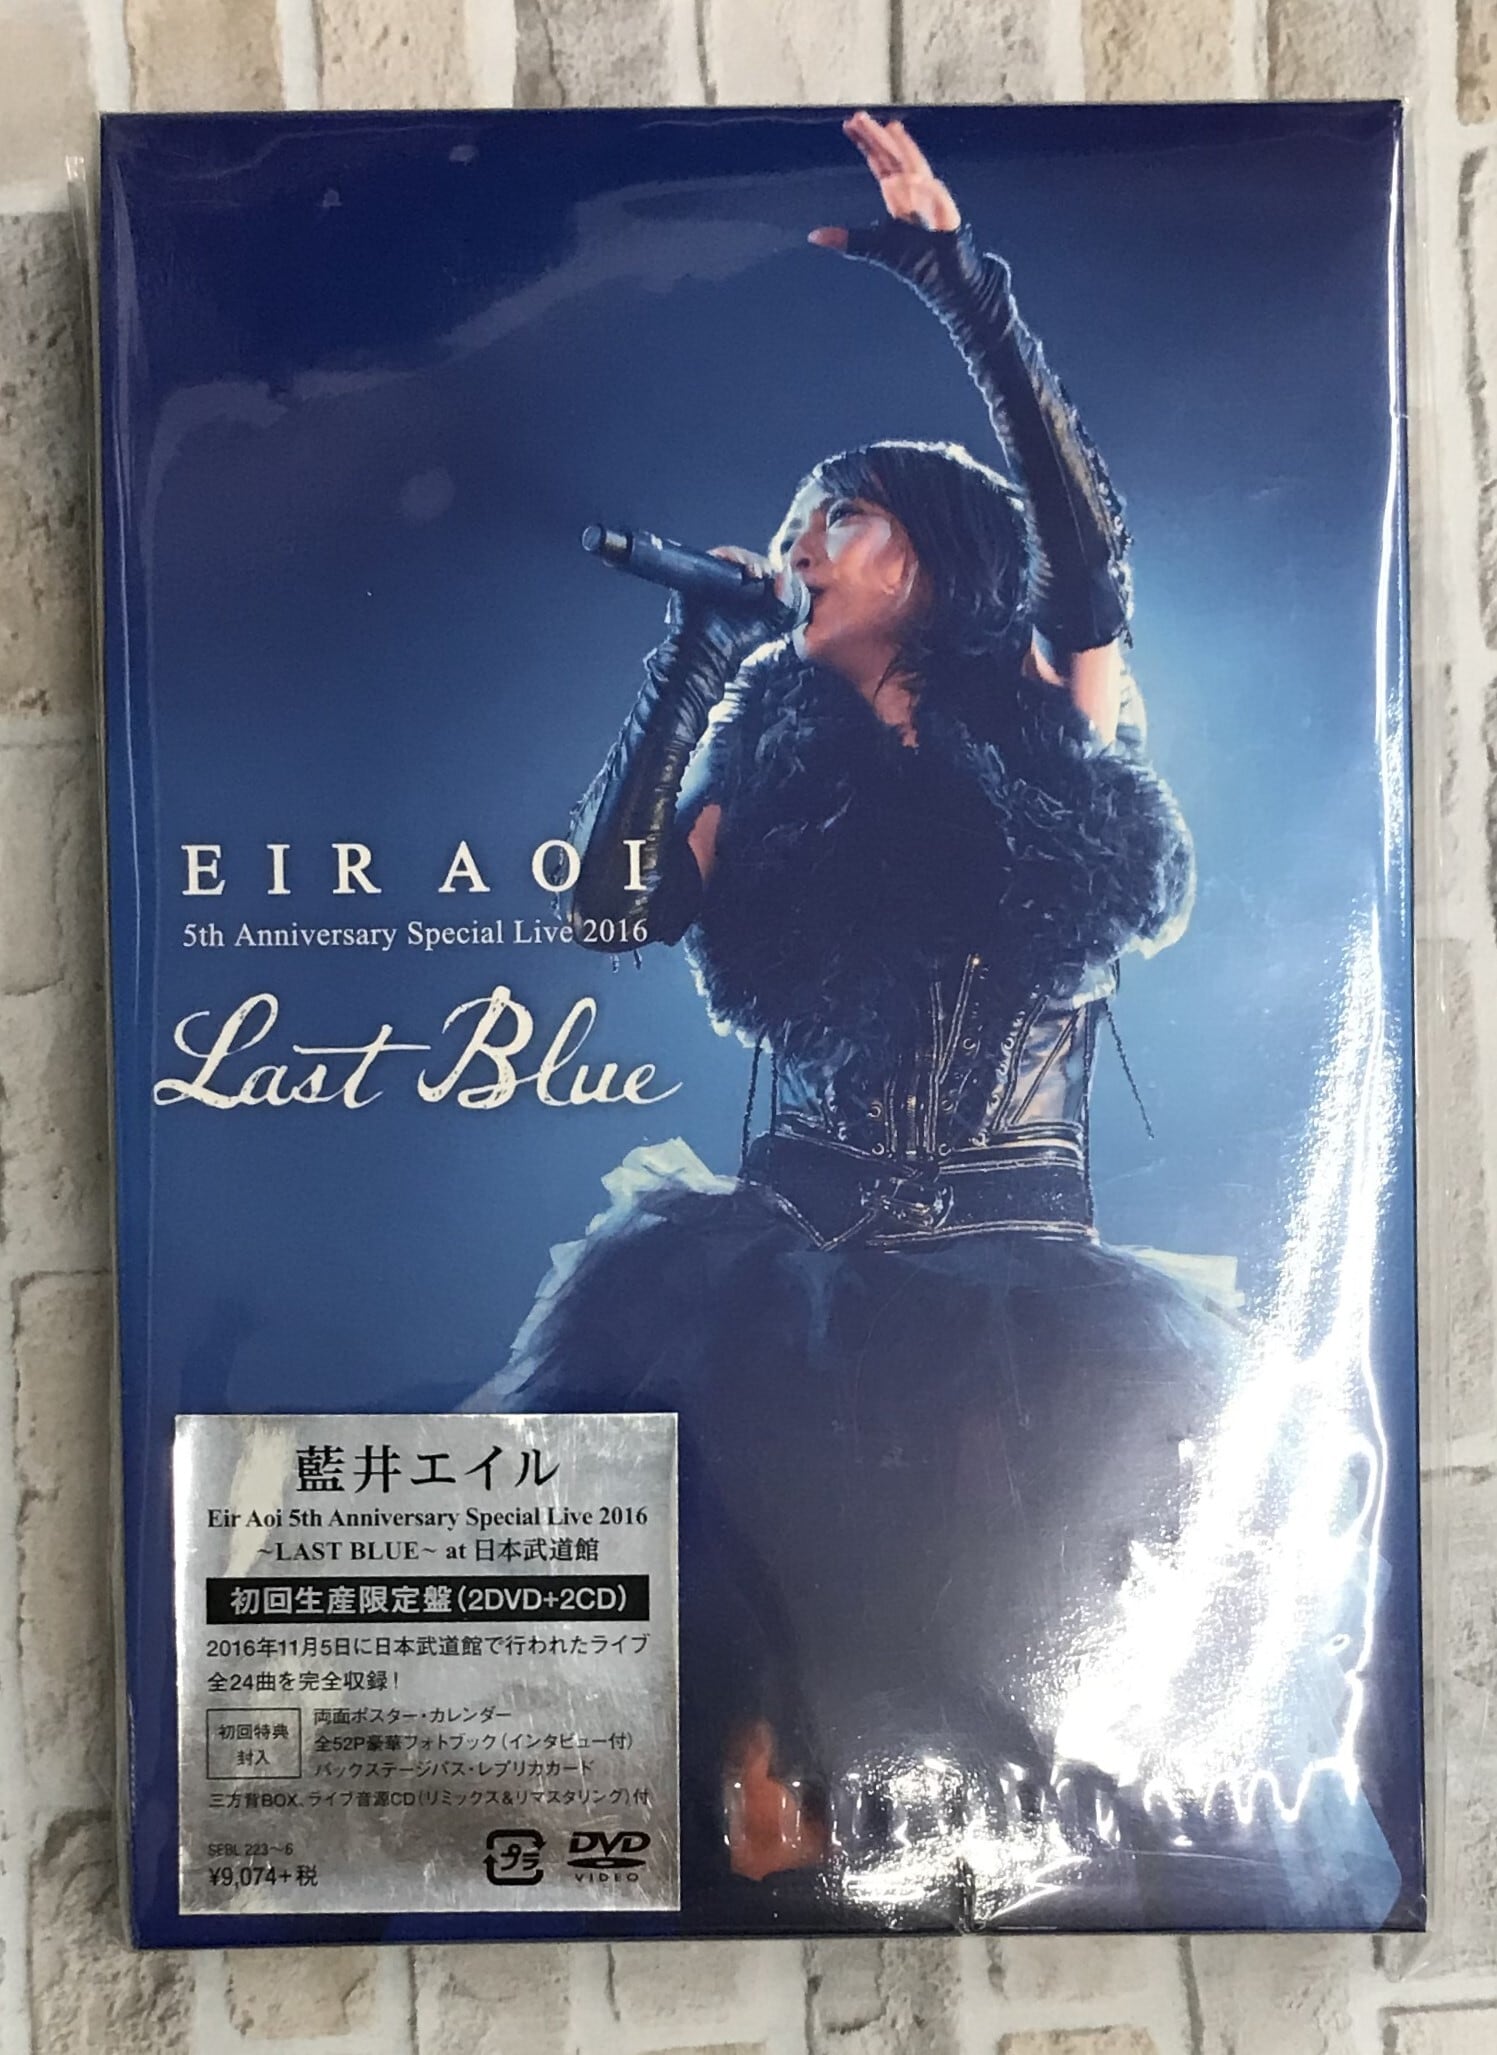 Eir Aoi 5th Anniversary Special Live 2016 ?LAST BLUE? at 日本武道館(初回生産限定盤) [DVD] dwos6rj